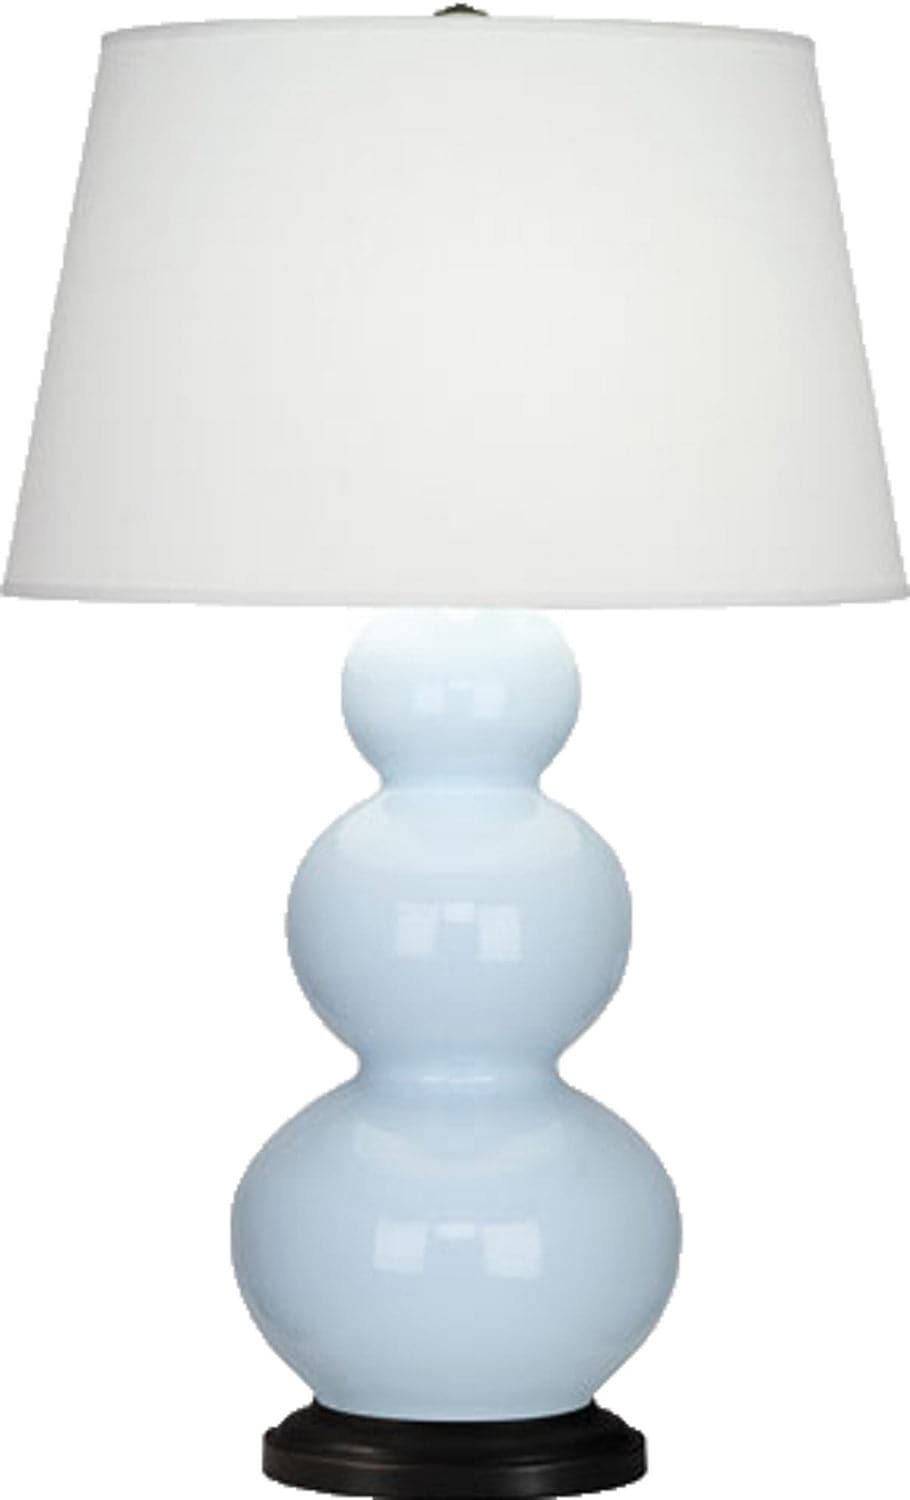 Robert Abbey - 341X - One Light Table Lamp - Triple Gourd - Baby Blue Glazed w/Deep Patina Bronze